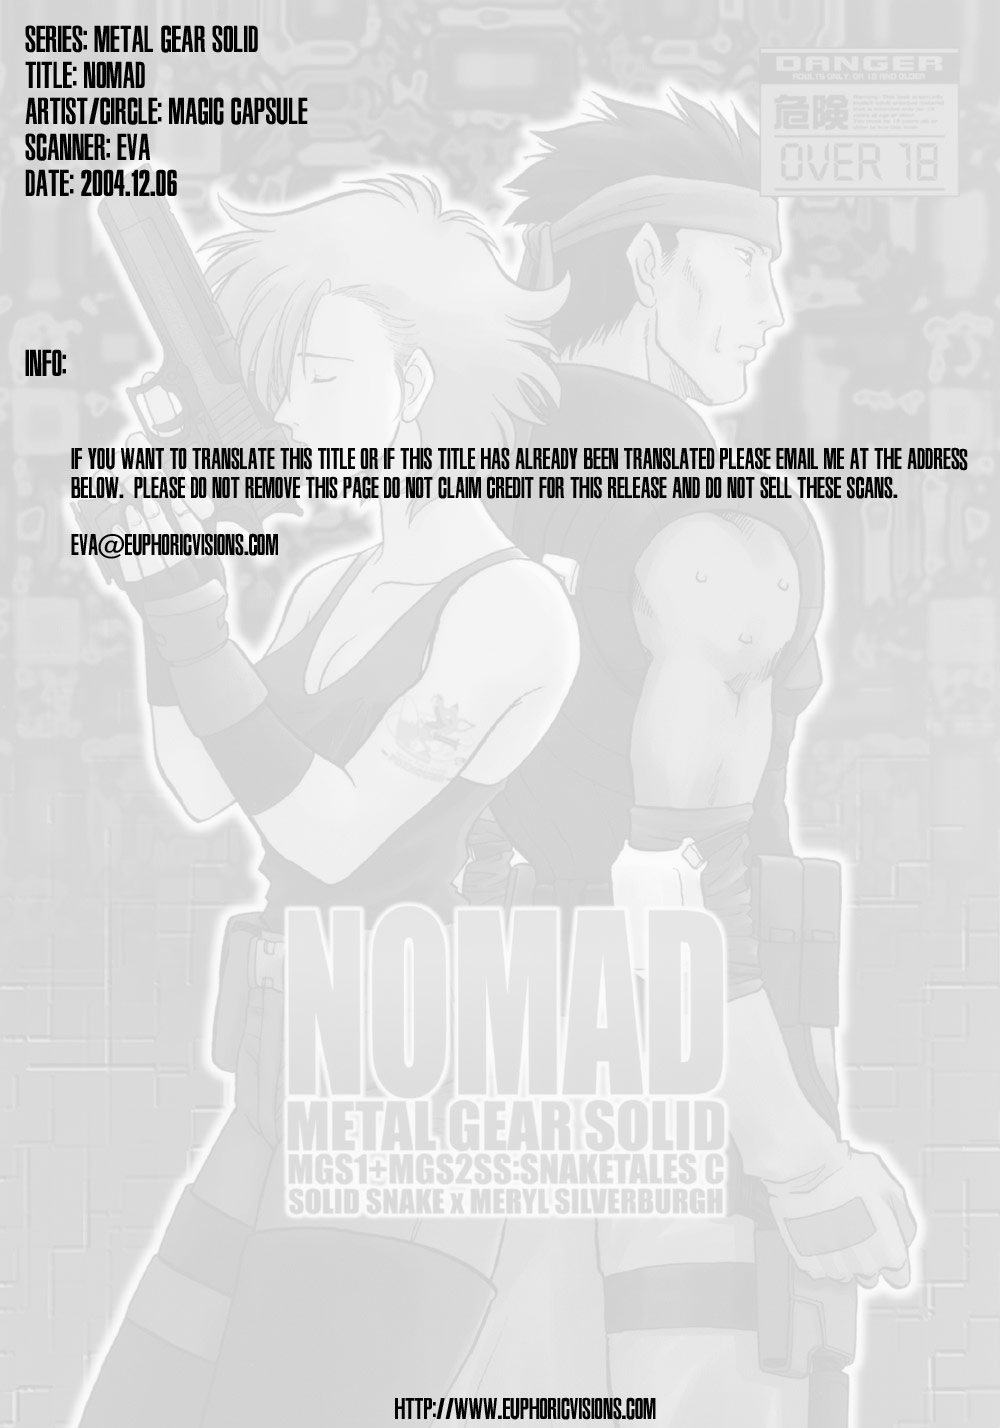 Nomad (Metal Gear Solid) 